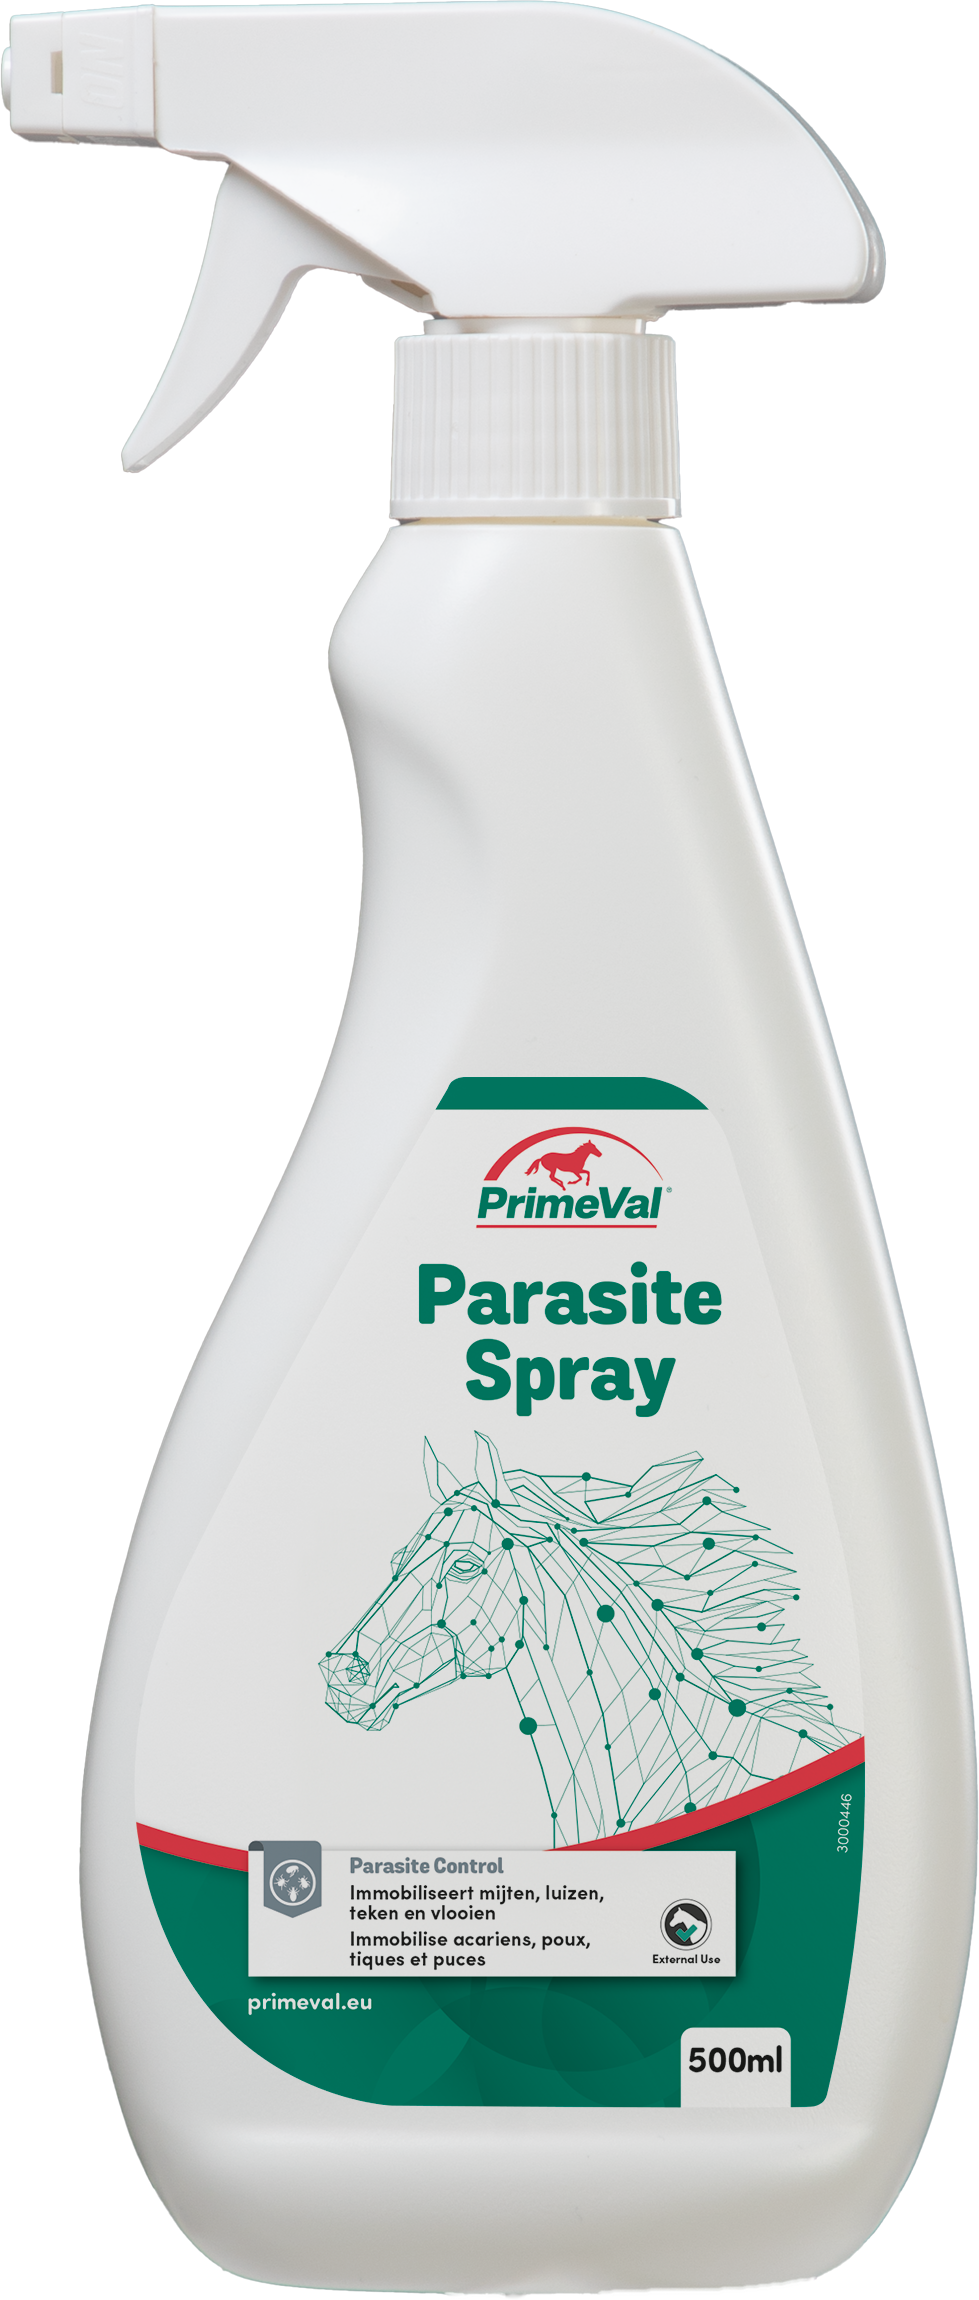 primeval parasite spray werkt tegen parasieten